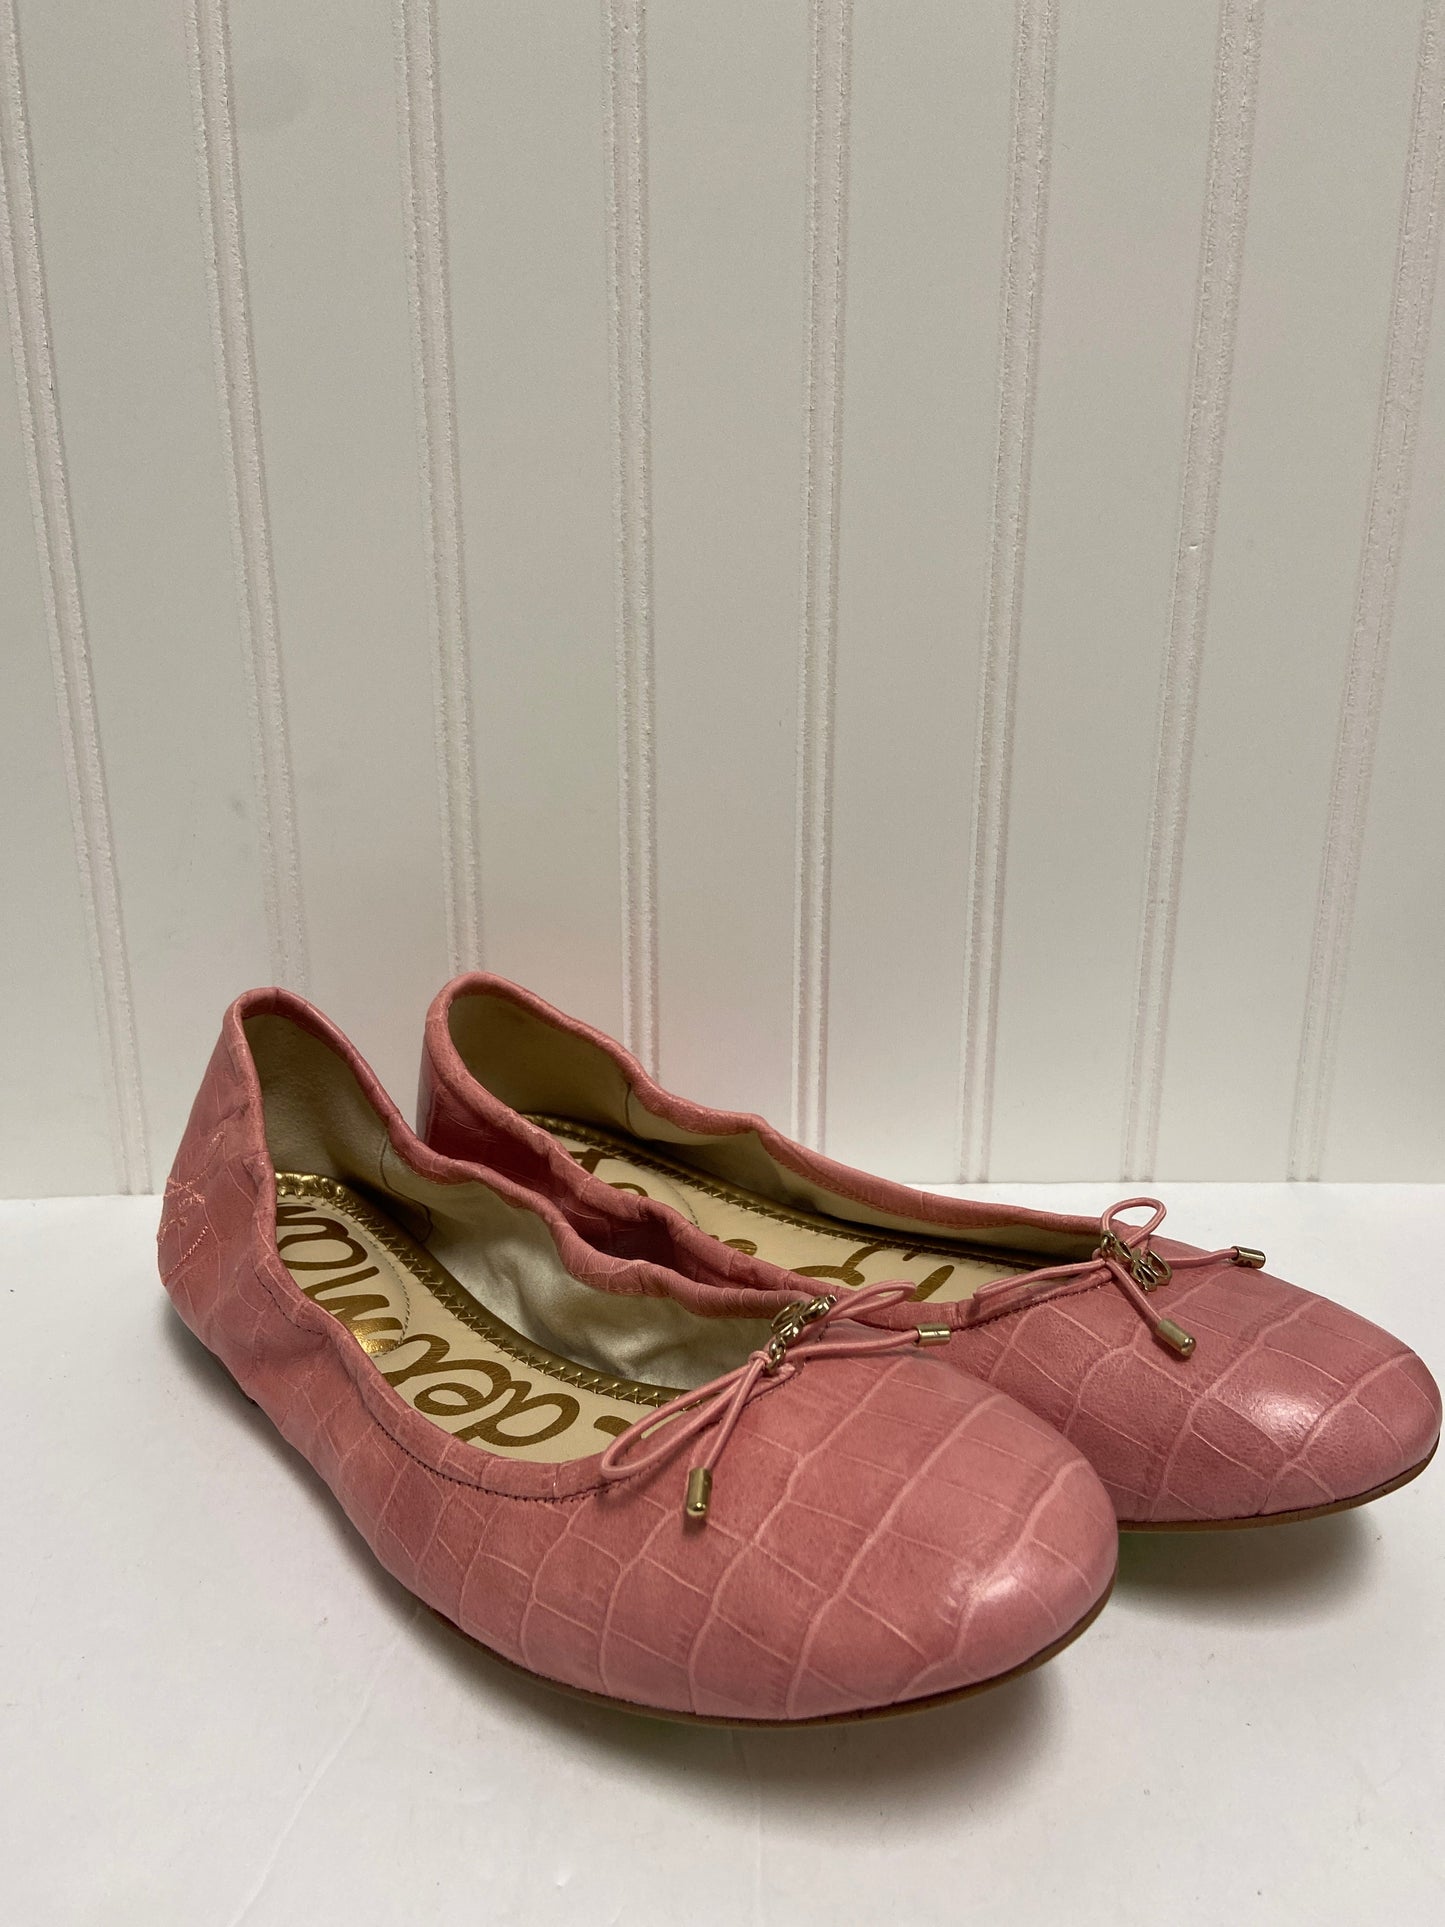 Shoes Flats By Sam Edelman  Size: 9.5